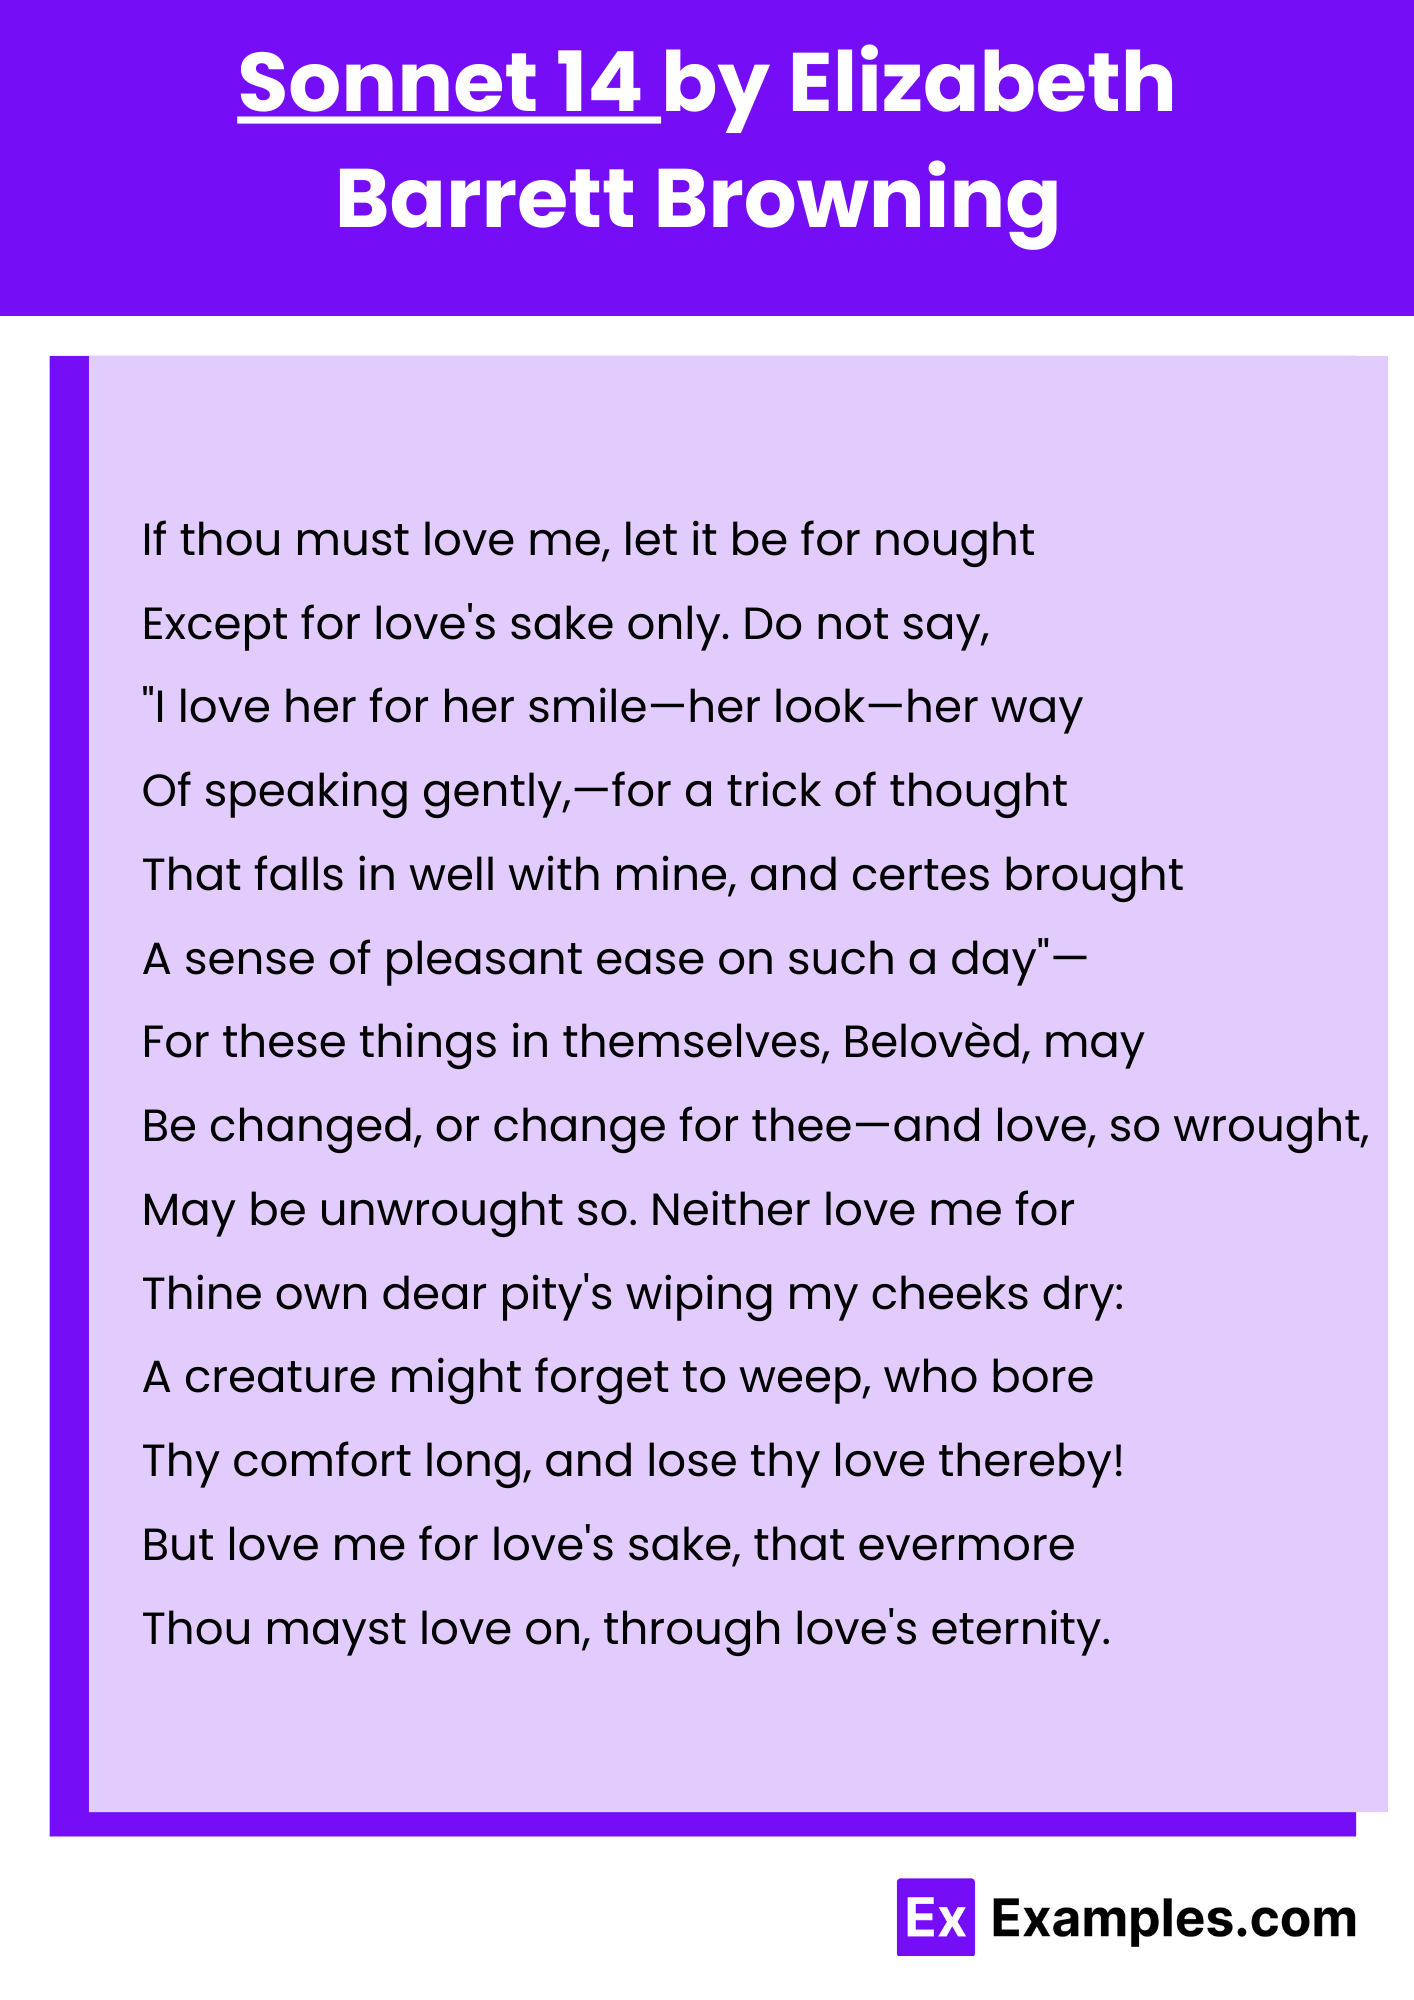 Sonnet 14 by Elizabeth Barrett Browning